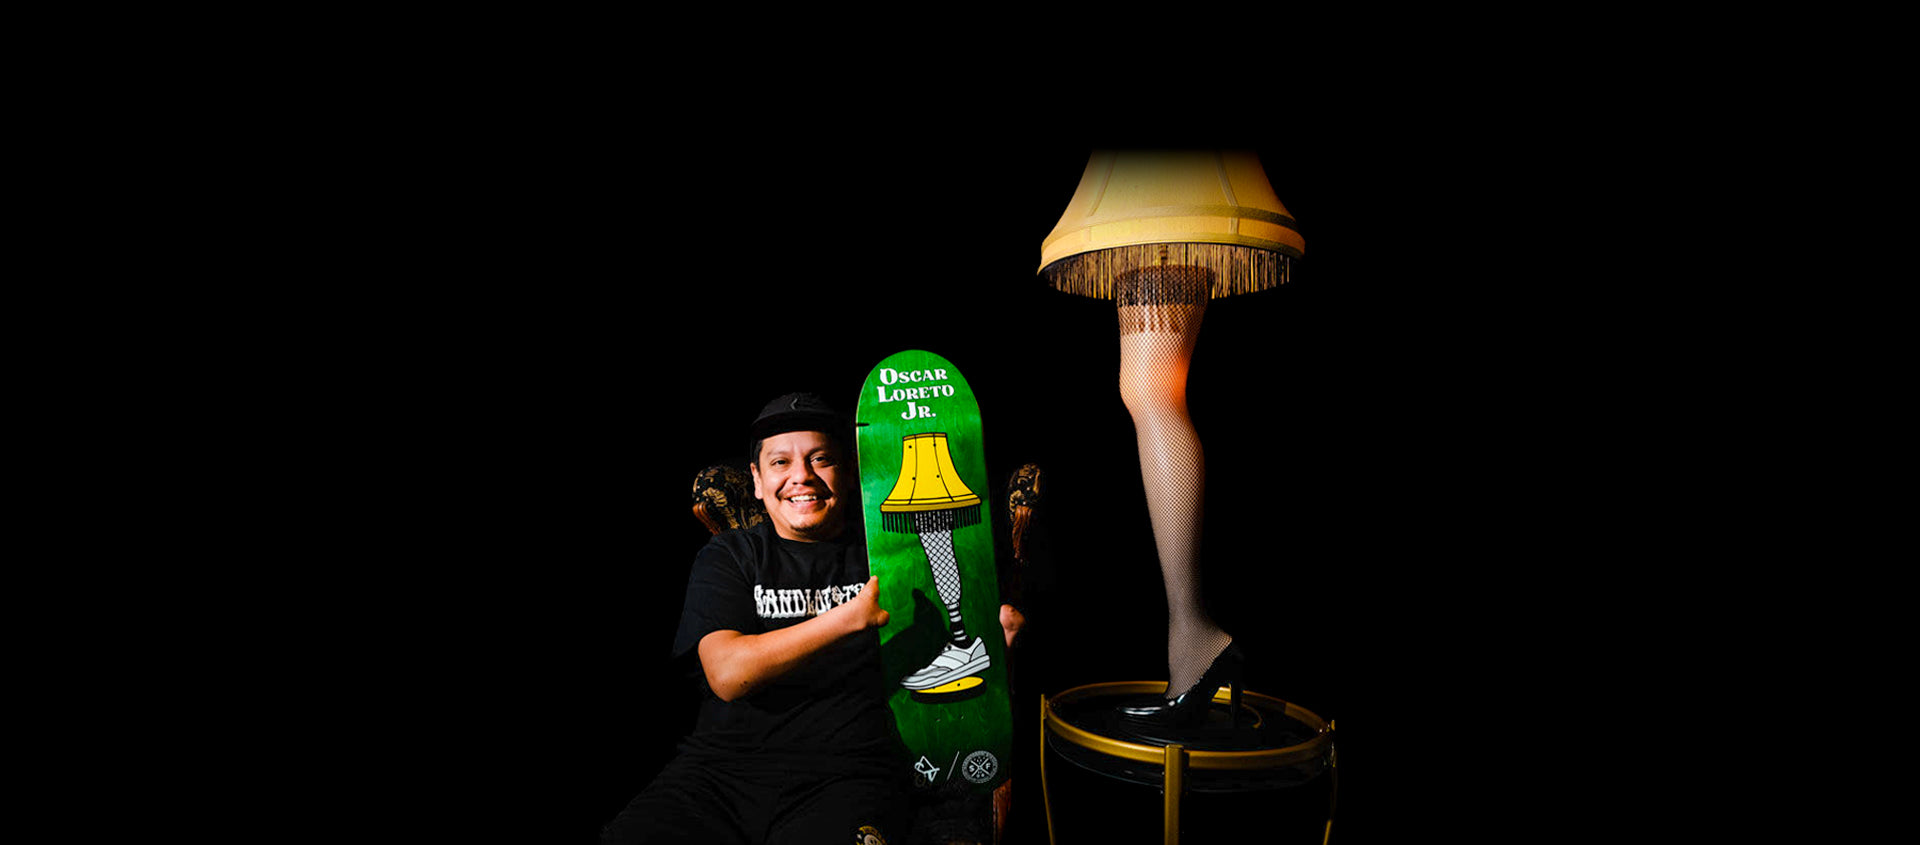 Portrait of Team Amplife® Ambassador Oscar Loreto, Jr. with his signature skateboard, "An Oscar Story", next to the Christmas Story Leg Lamp